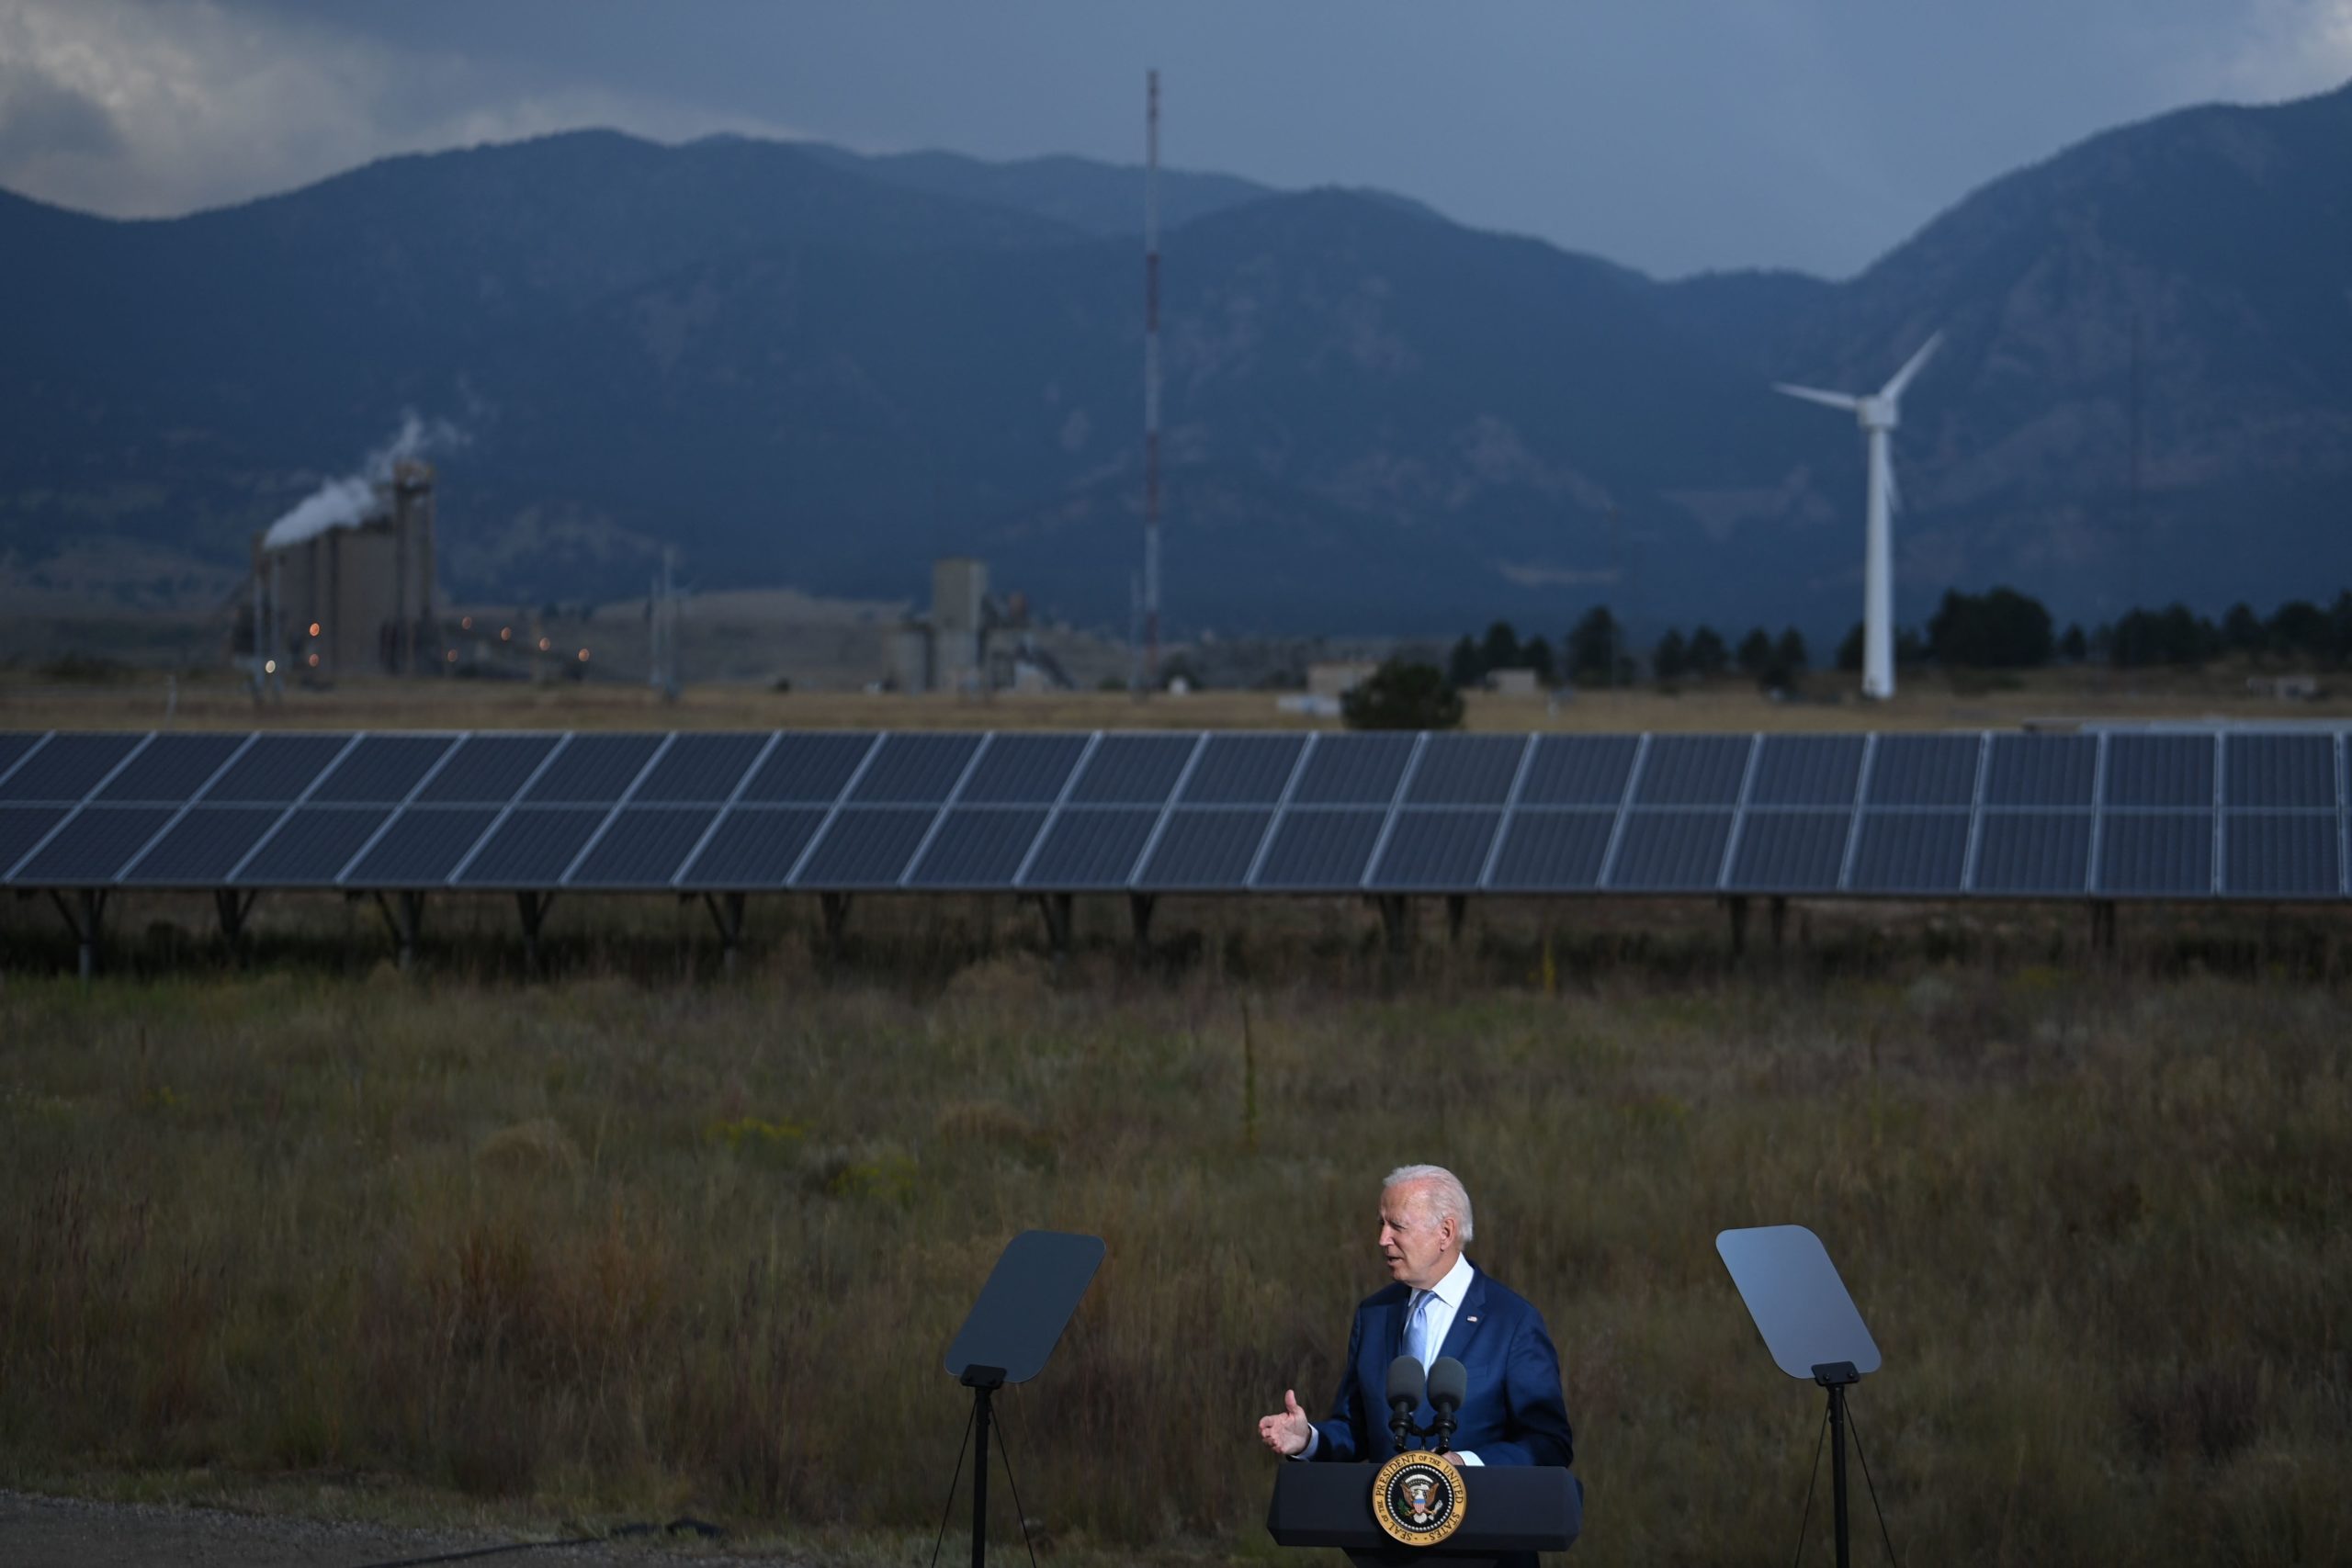 President Joe Biden speaks at the National Renewable Energy Laboratory in Arvada, Colorado on Sept. 14, 2021. (Brendan Smialowski/AFP via Getty Images)